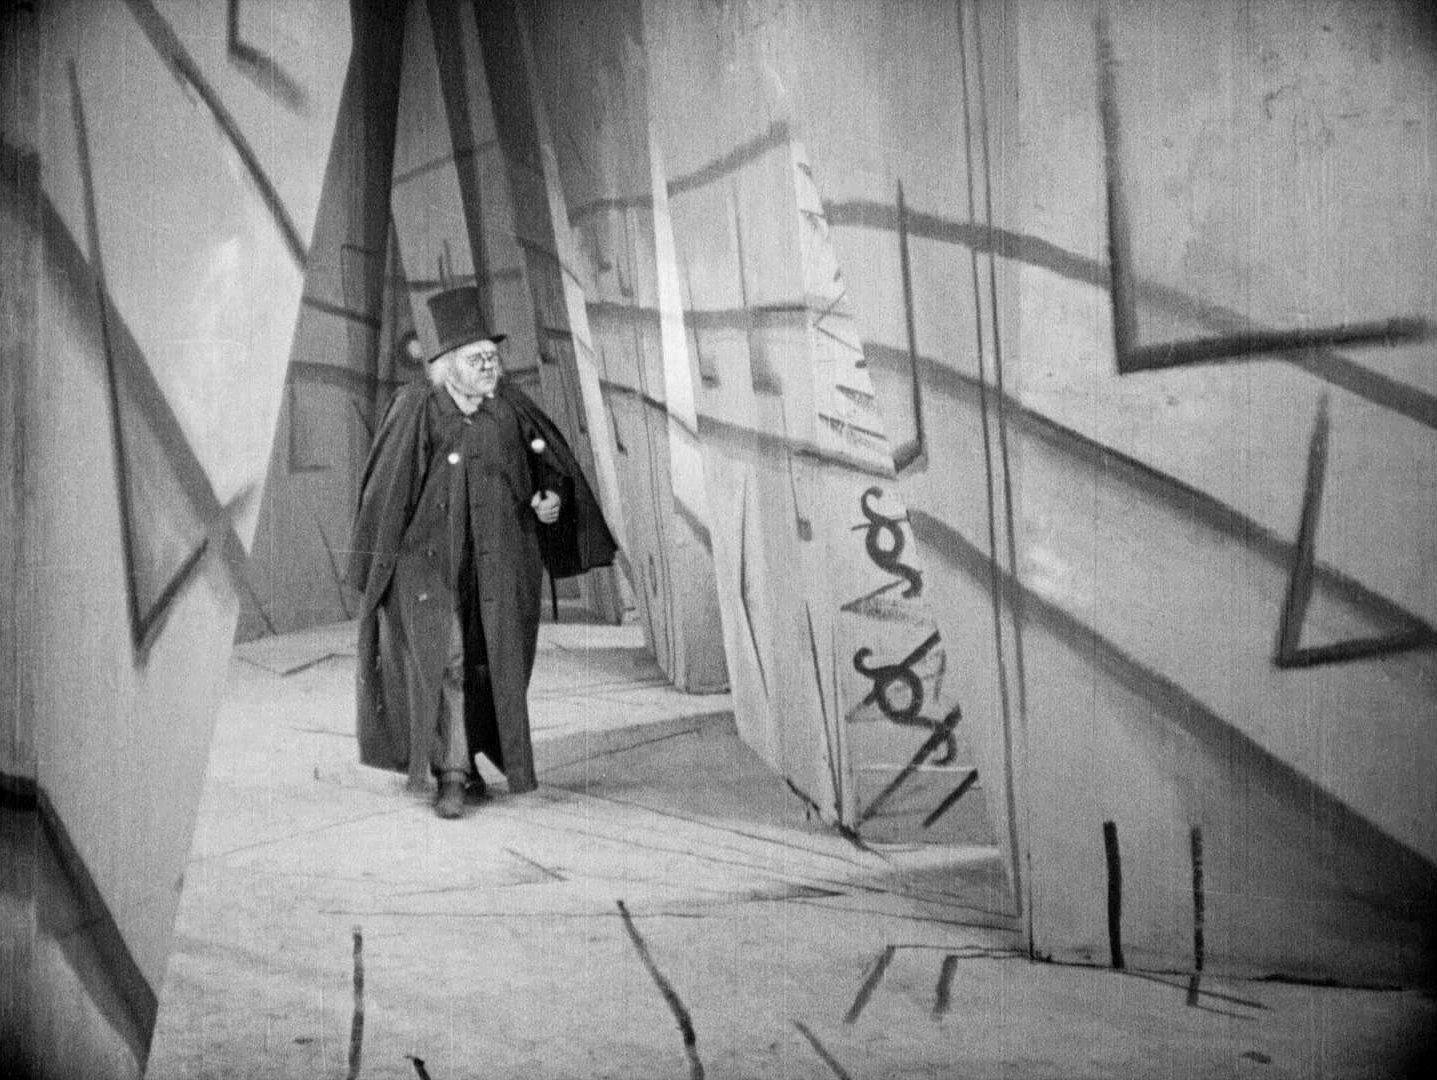 The Cabinet of Dr. Caligai - Das Cabinet des Dr. Caligari - Robert Wiene - Werner Krauss - Rathaus - German Expressionism